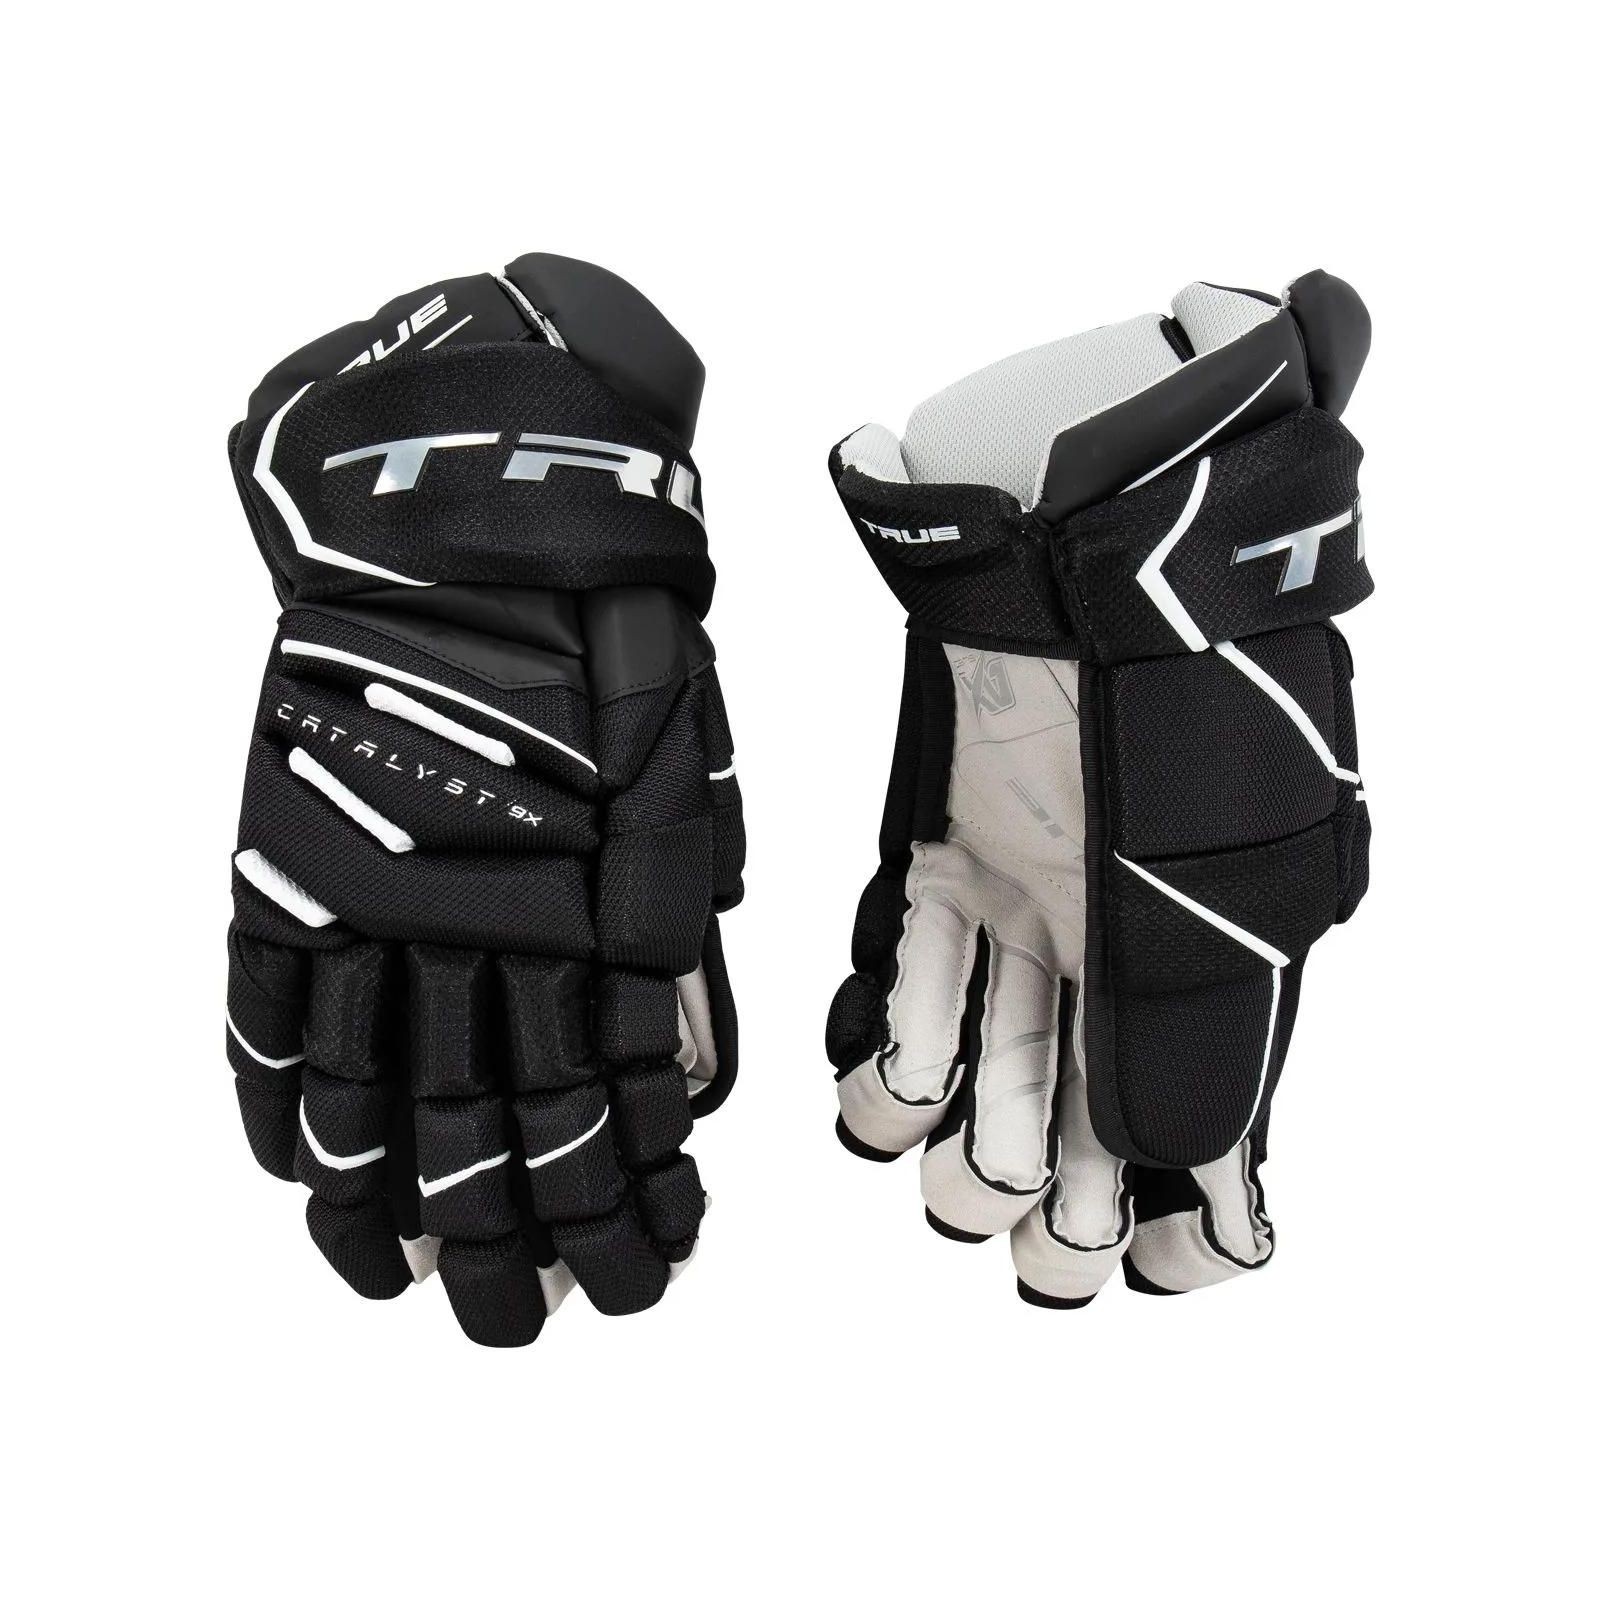 TRUE Catalyst 9X Senior Ice Hockey Gloves